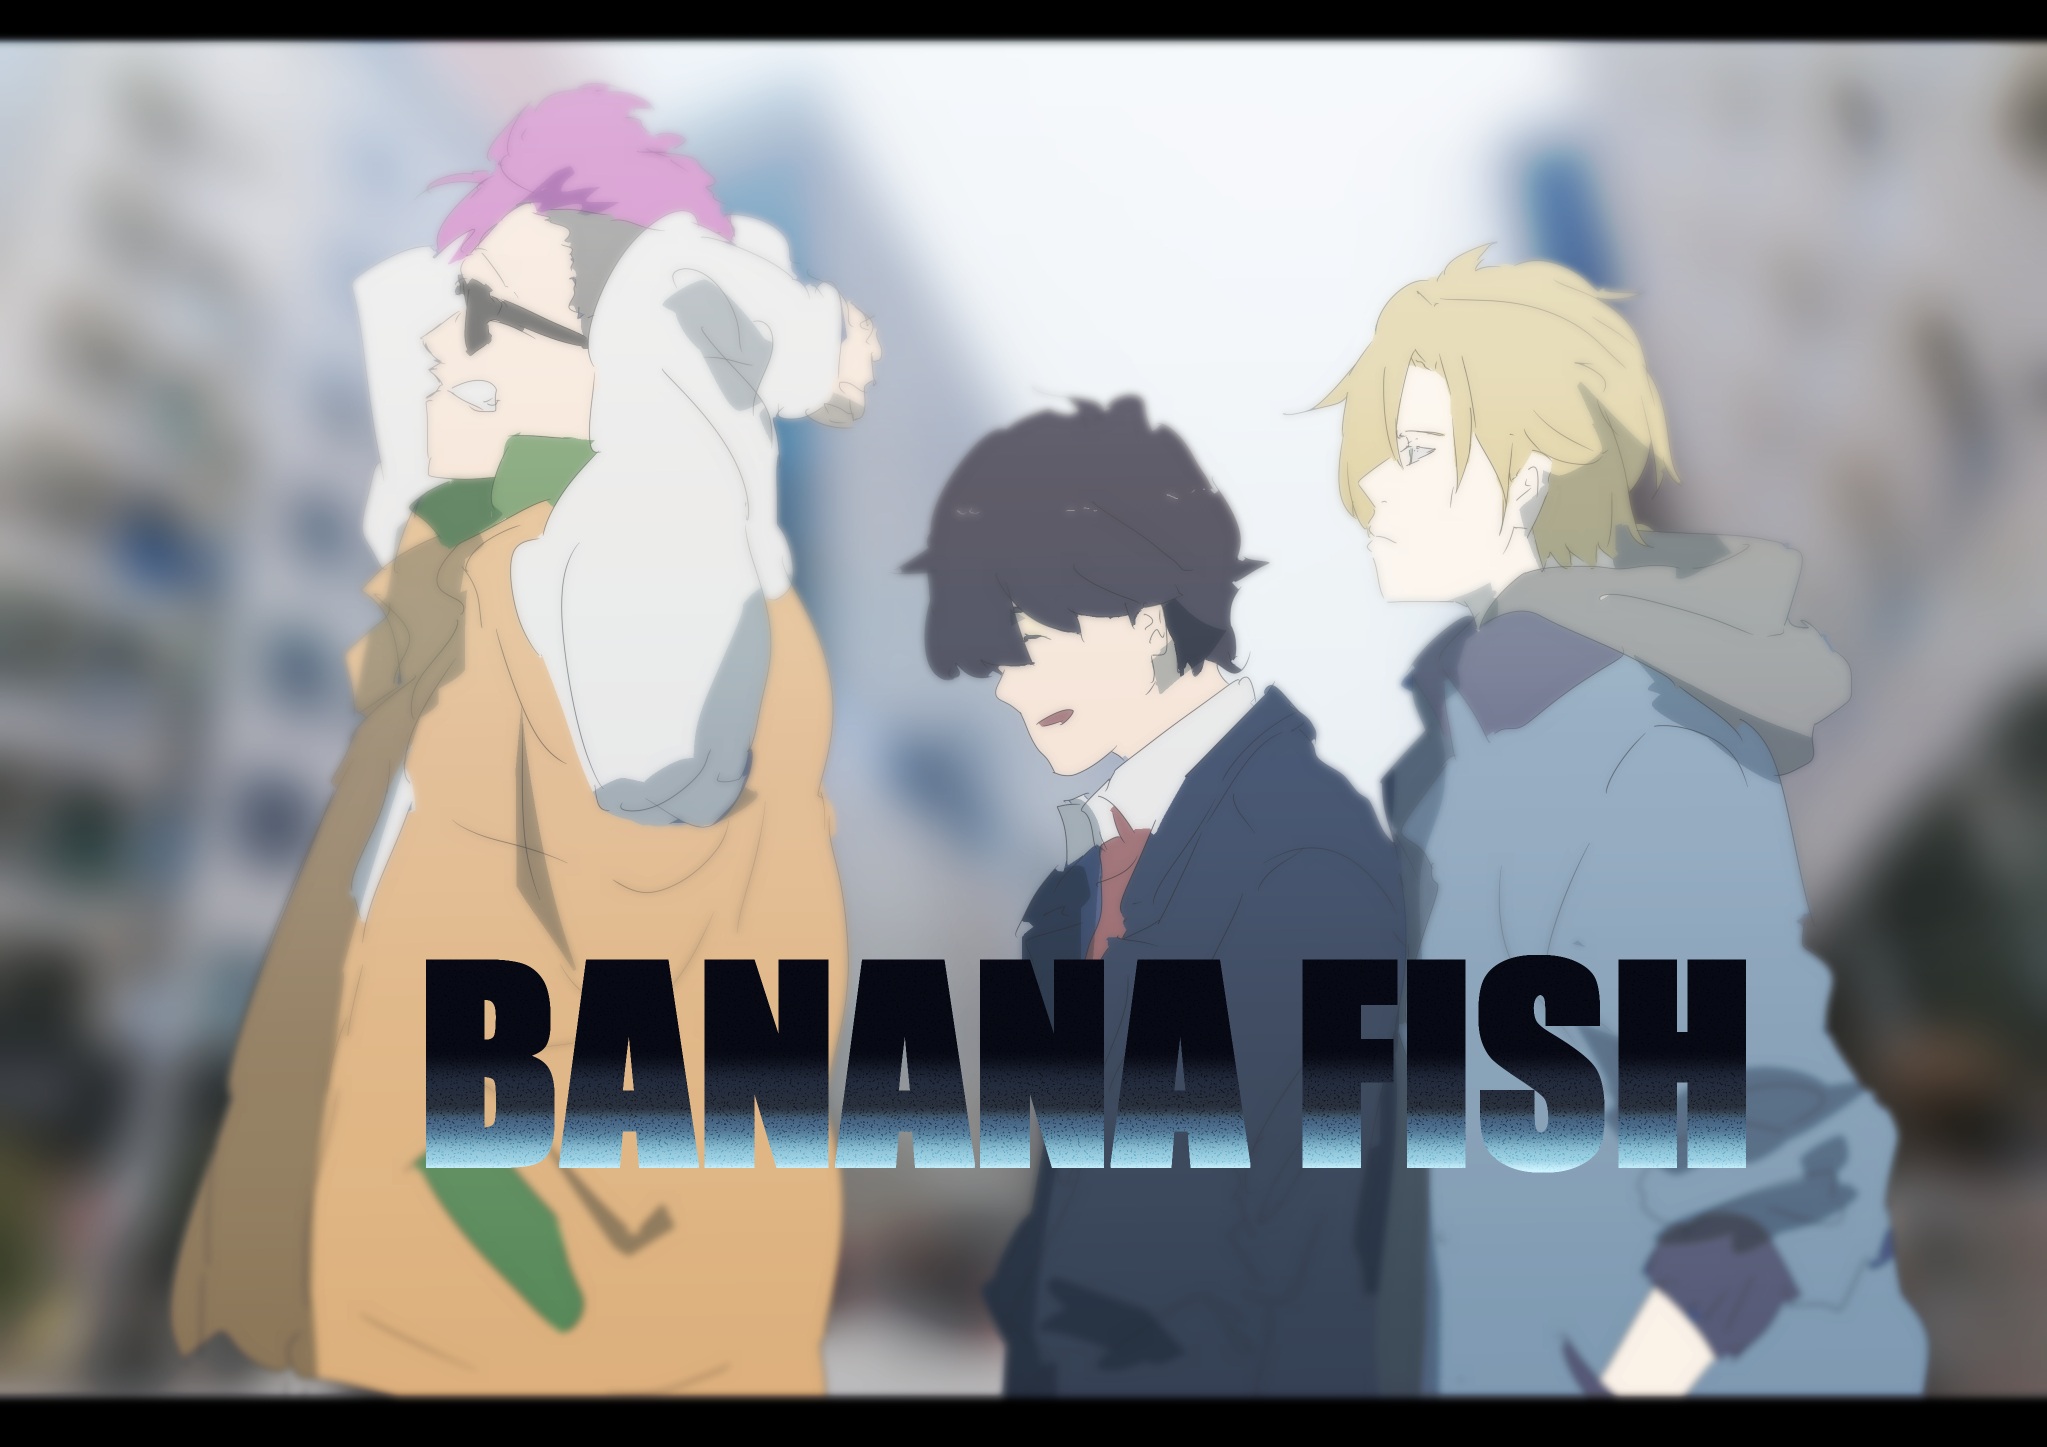 933176 descargar imagen animado, banana fish, lince de ceniza, eiji okumura, wong más corto: fondos de pantalla y protectores de pantalla gratis